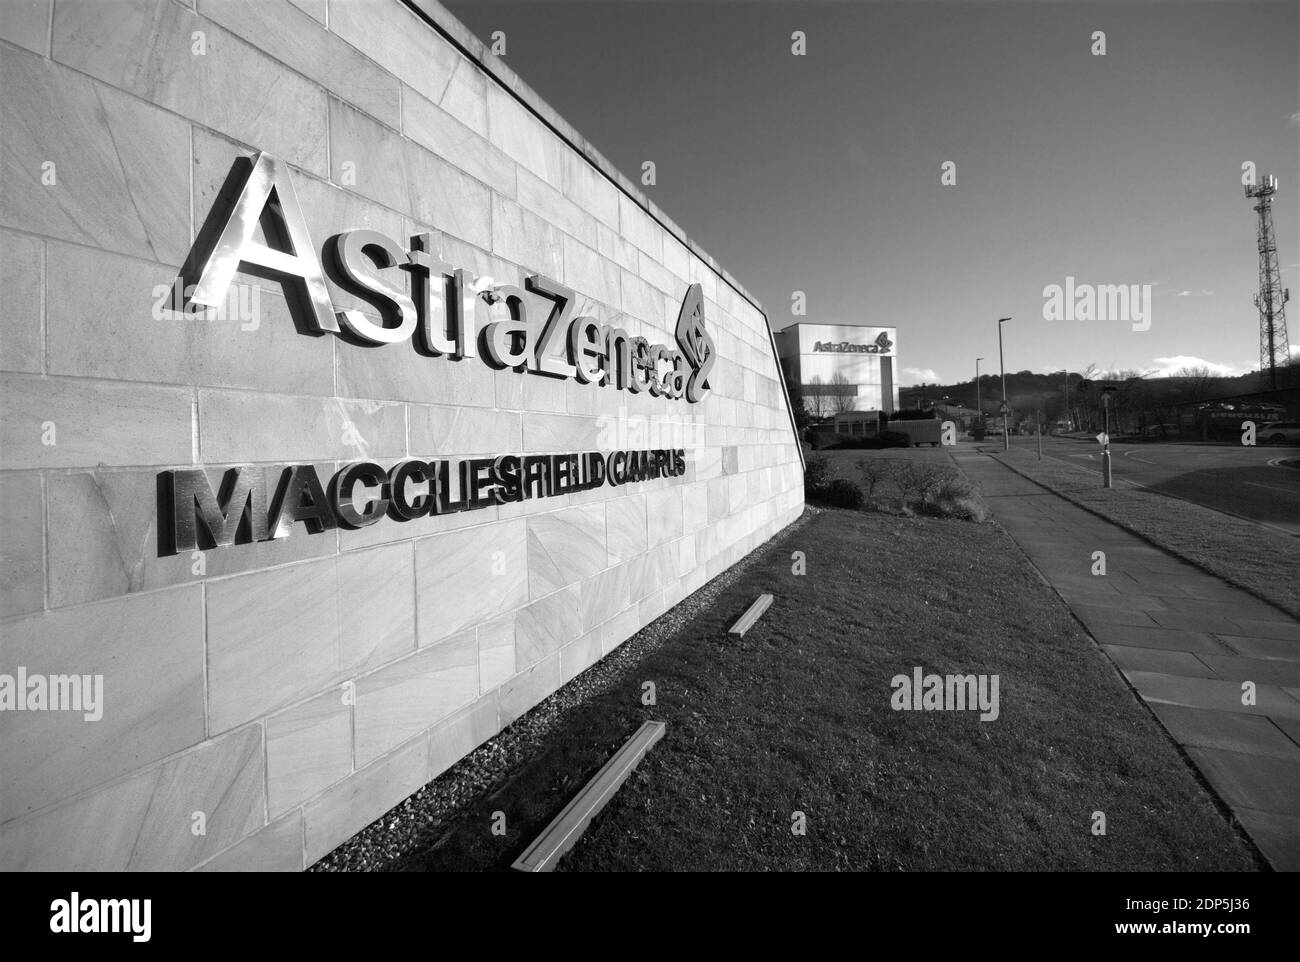 Astrazeneca pharmaceuticals manufacturing plant Macclesfield Stock Photo